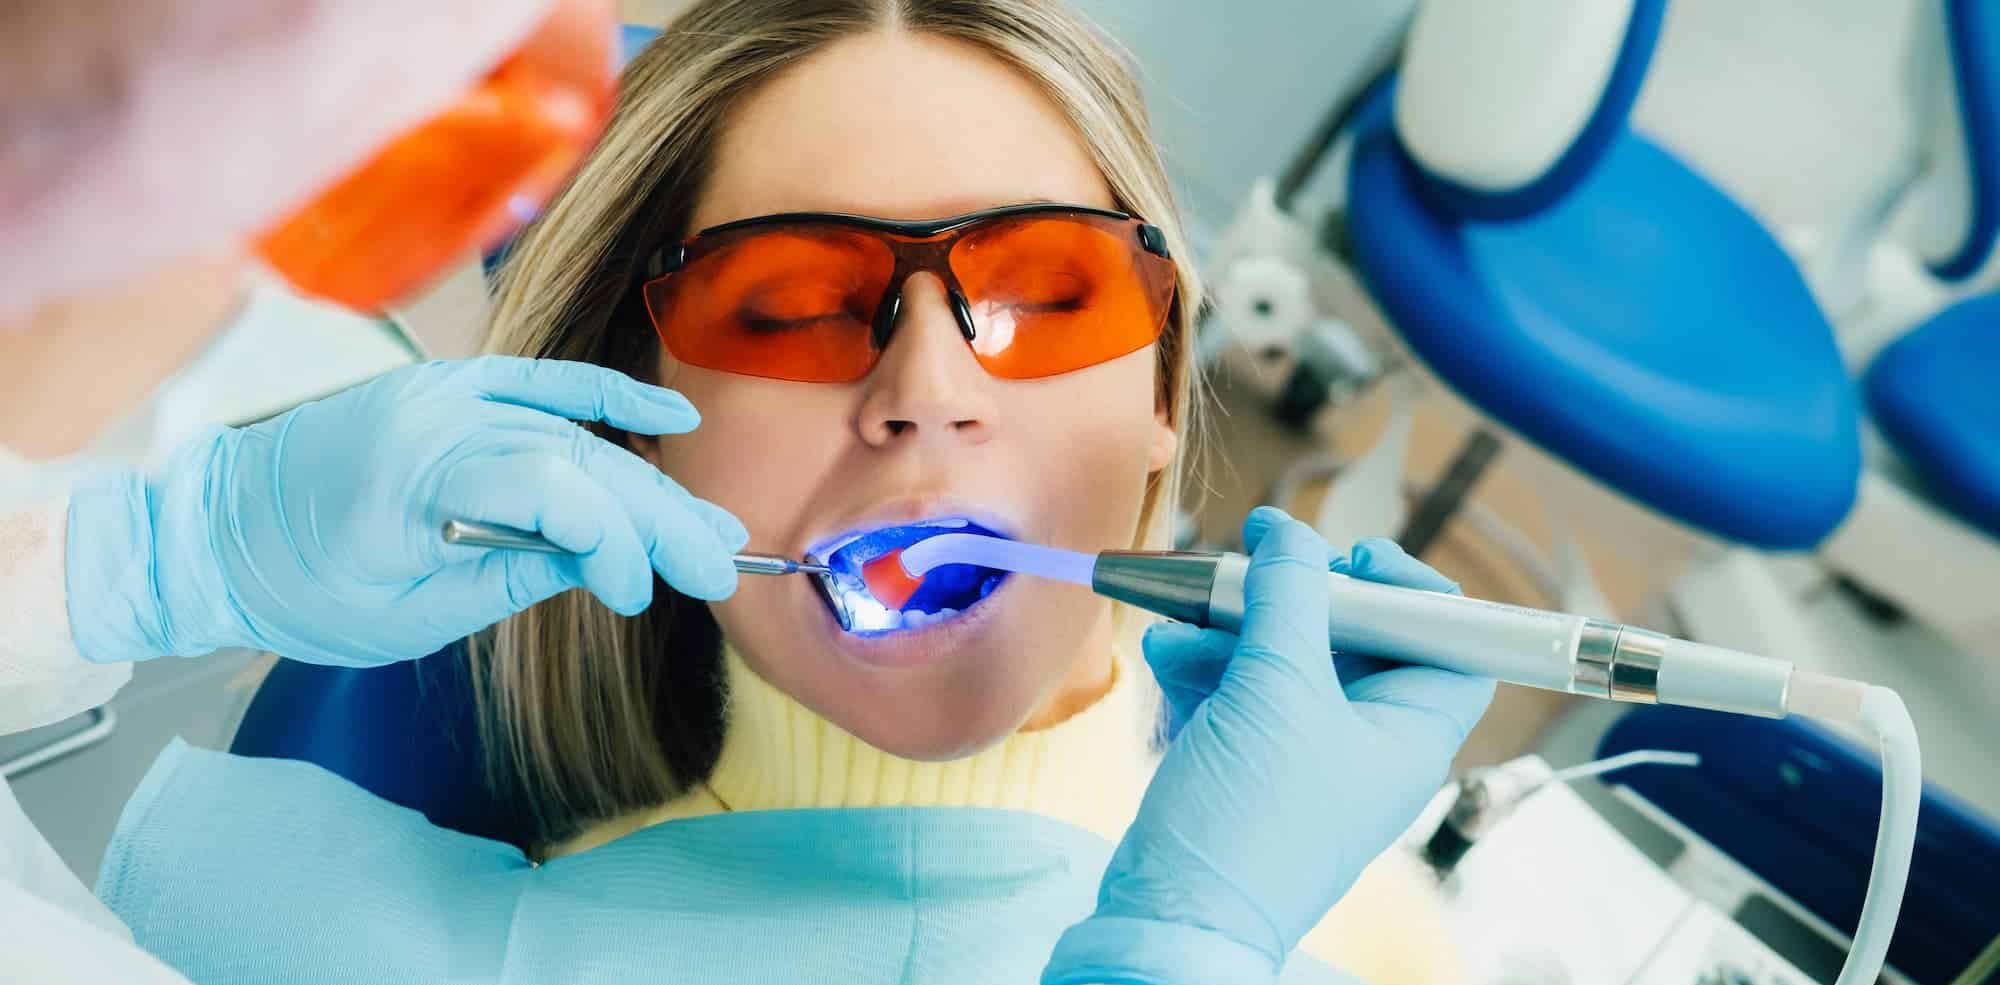 Dentist with ultraviolet light